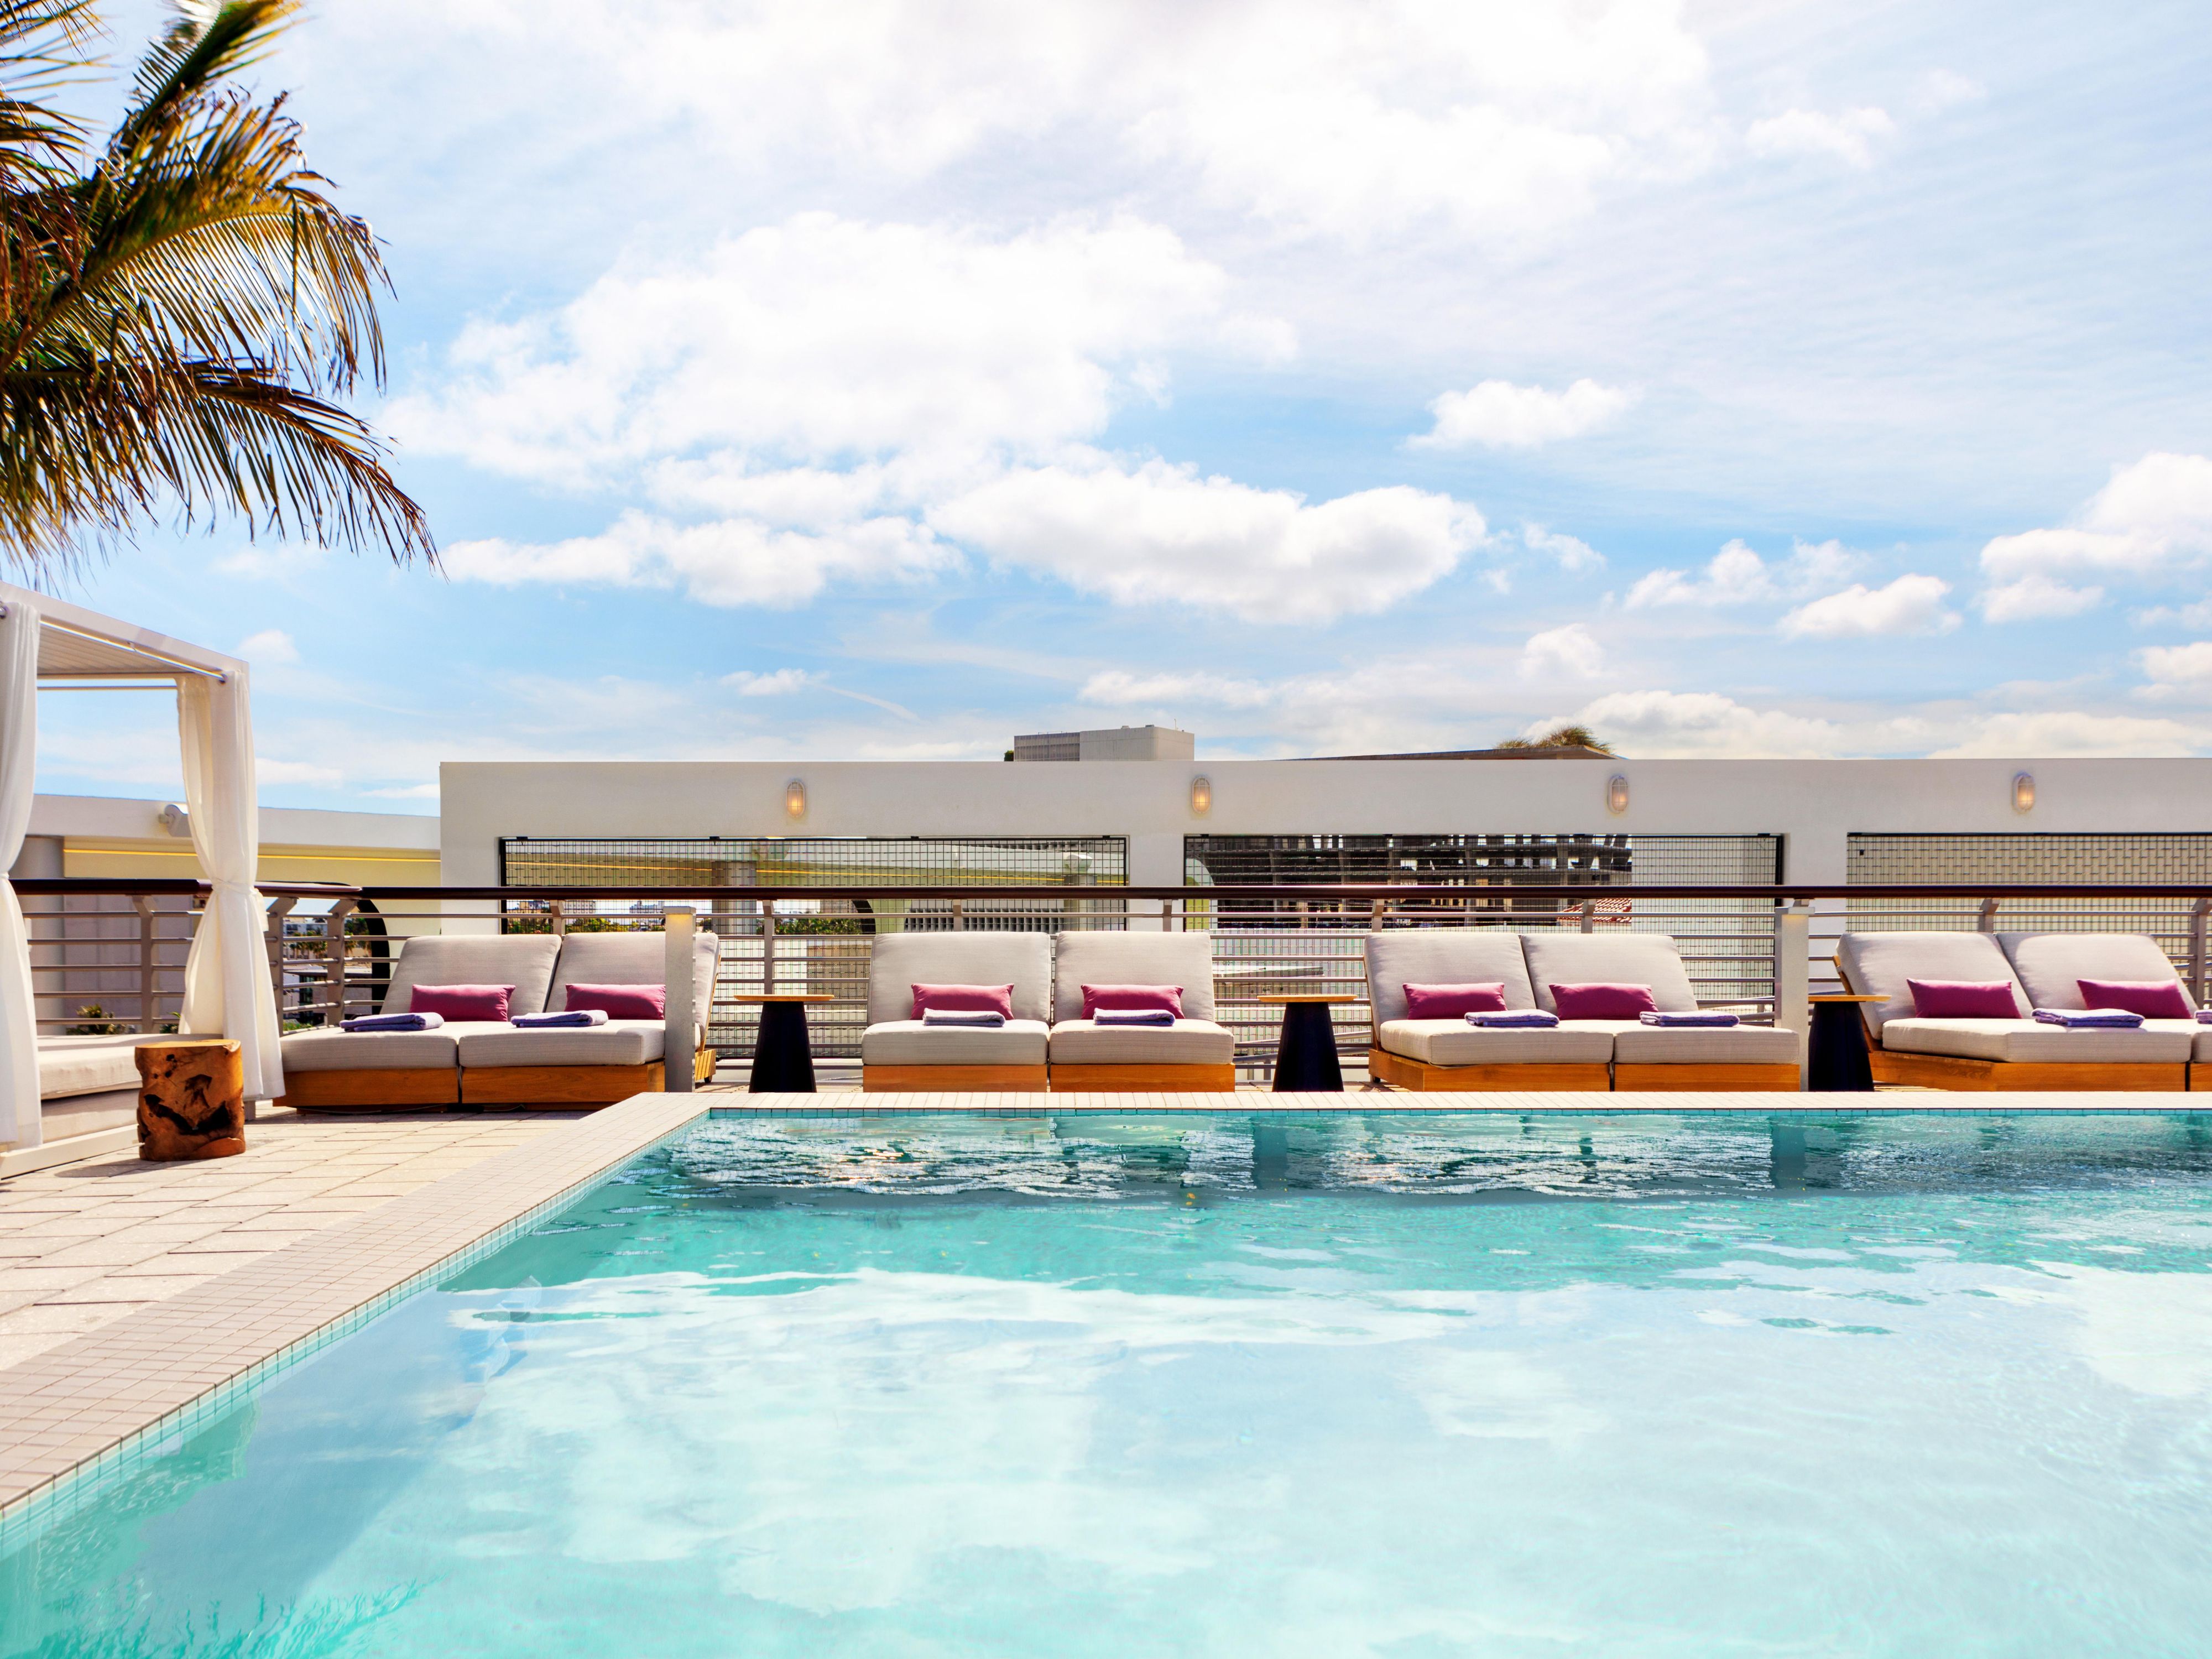 Hotel Palomar South Beach hotel pool photo